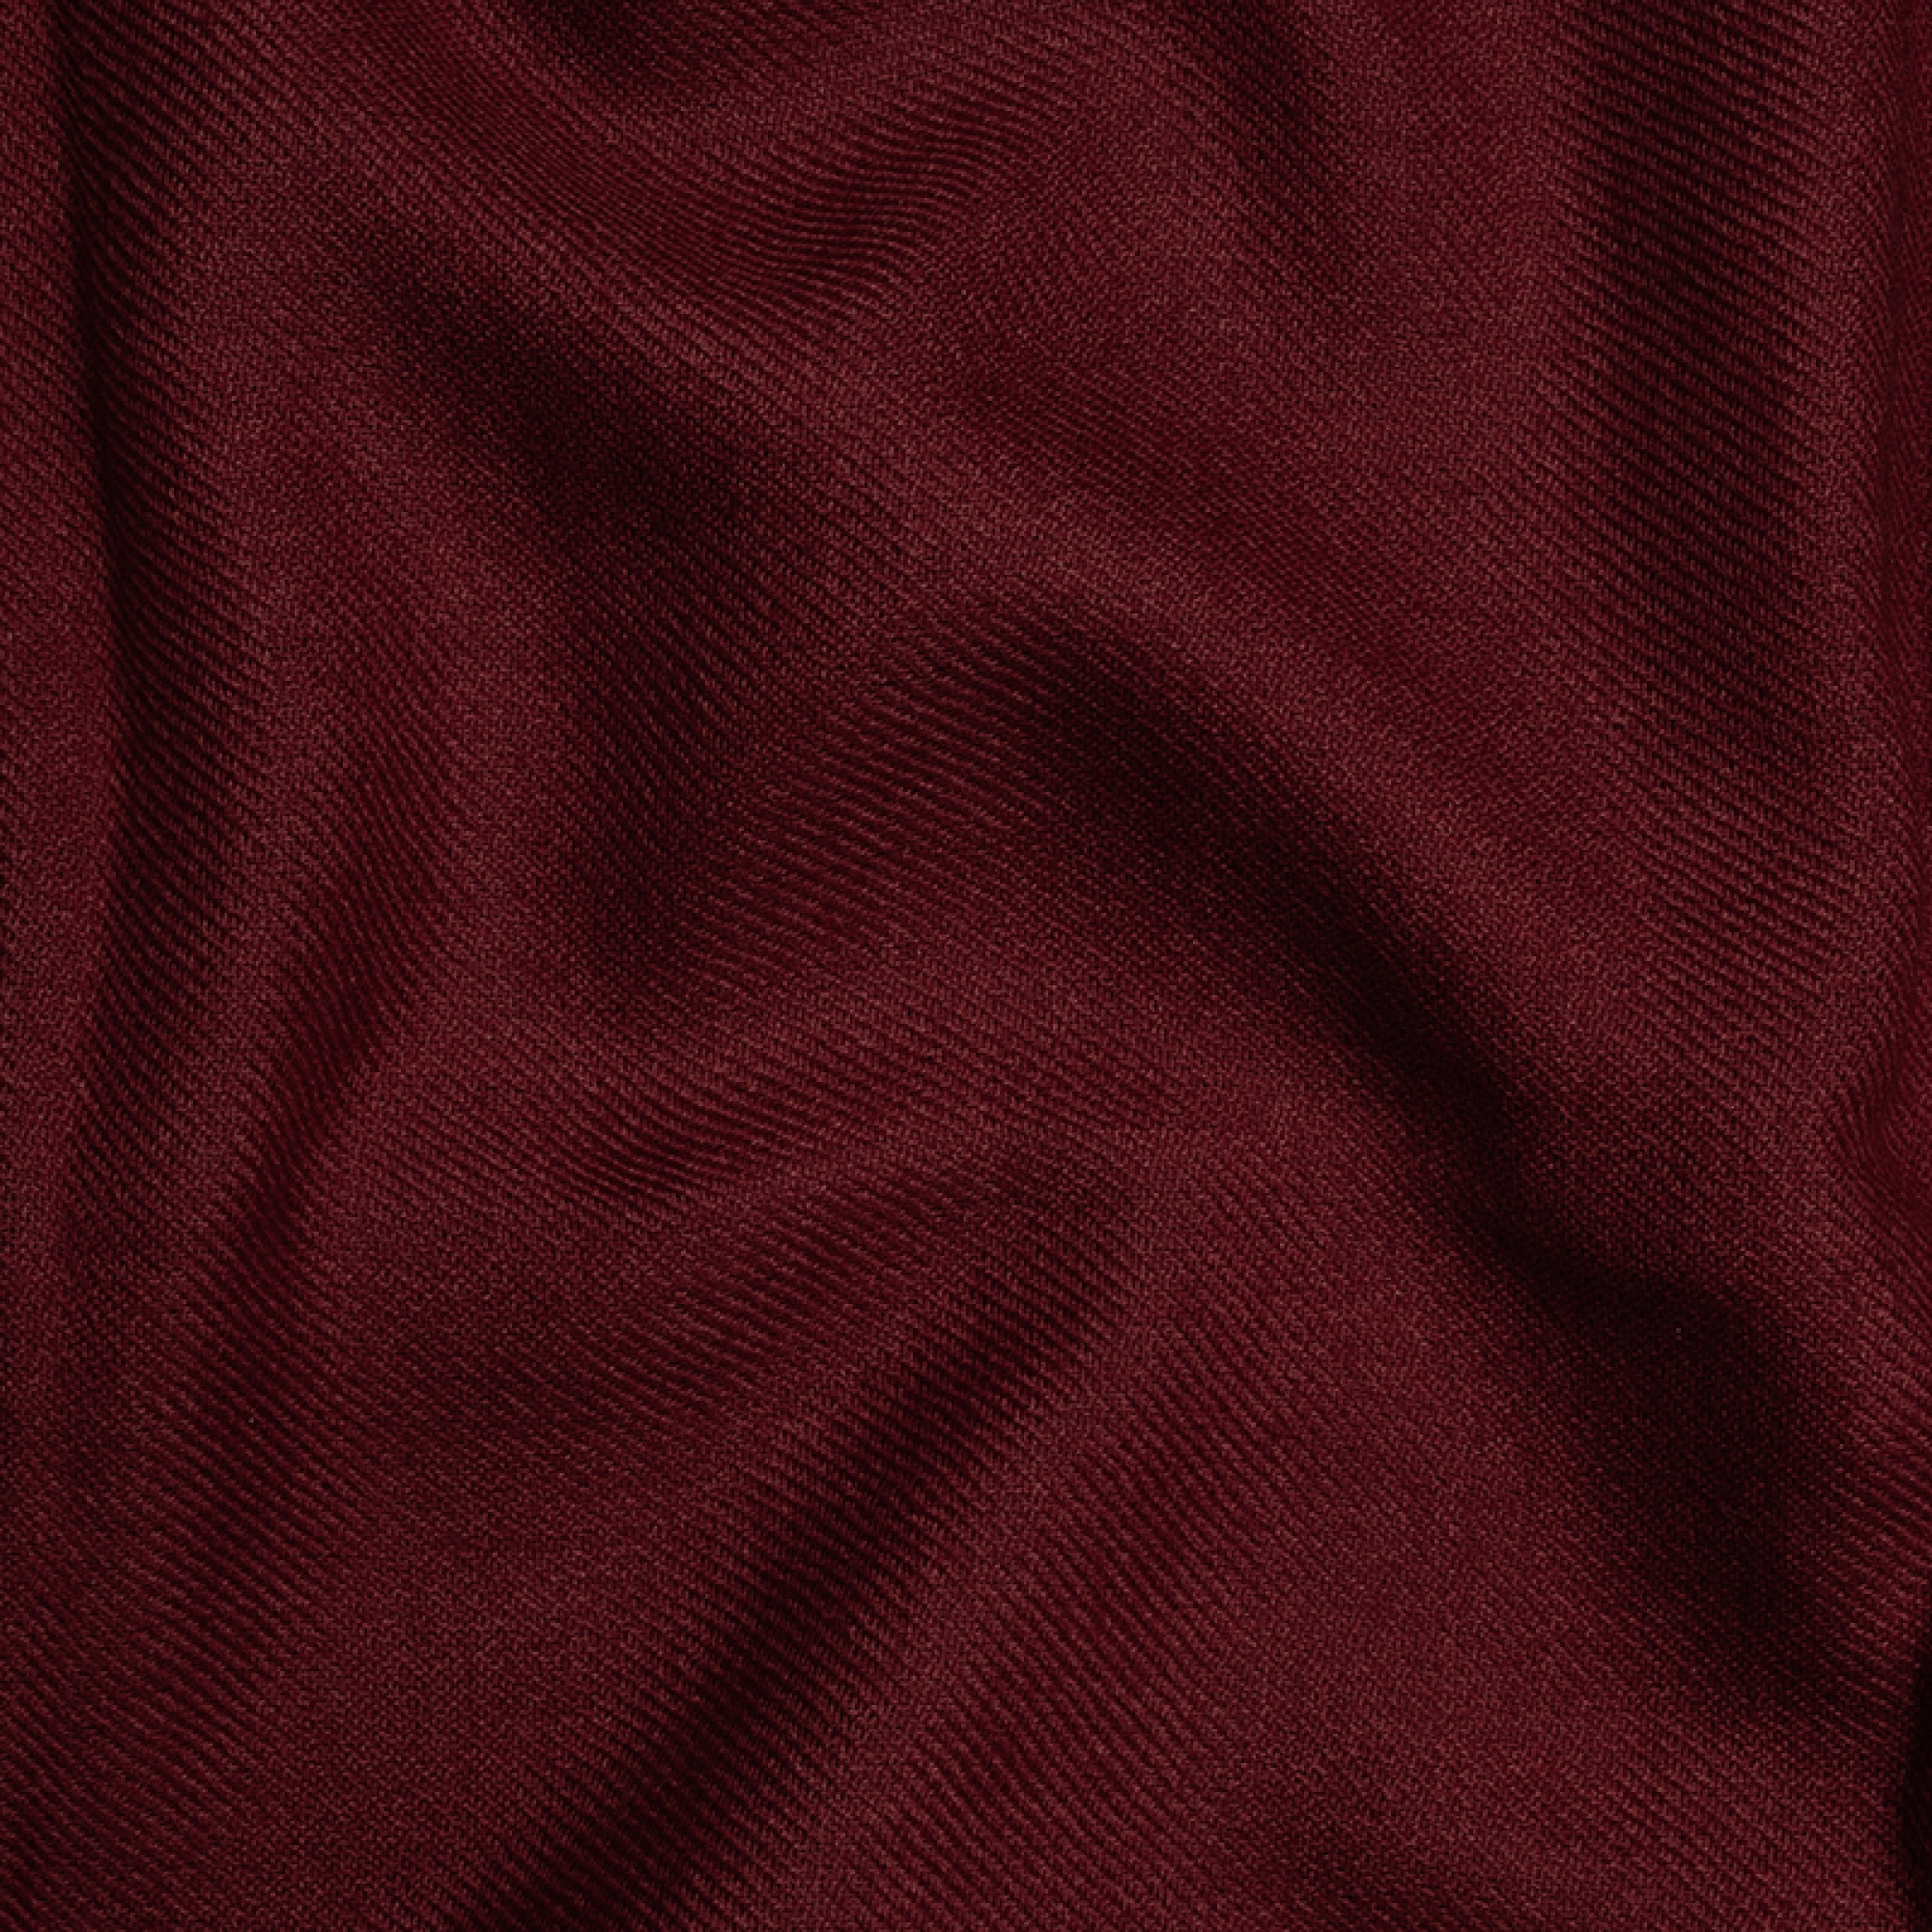 Cashmere accessories blanket toodoo plain s 140 x 200 dark auburn 140 x 200 cm